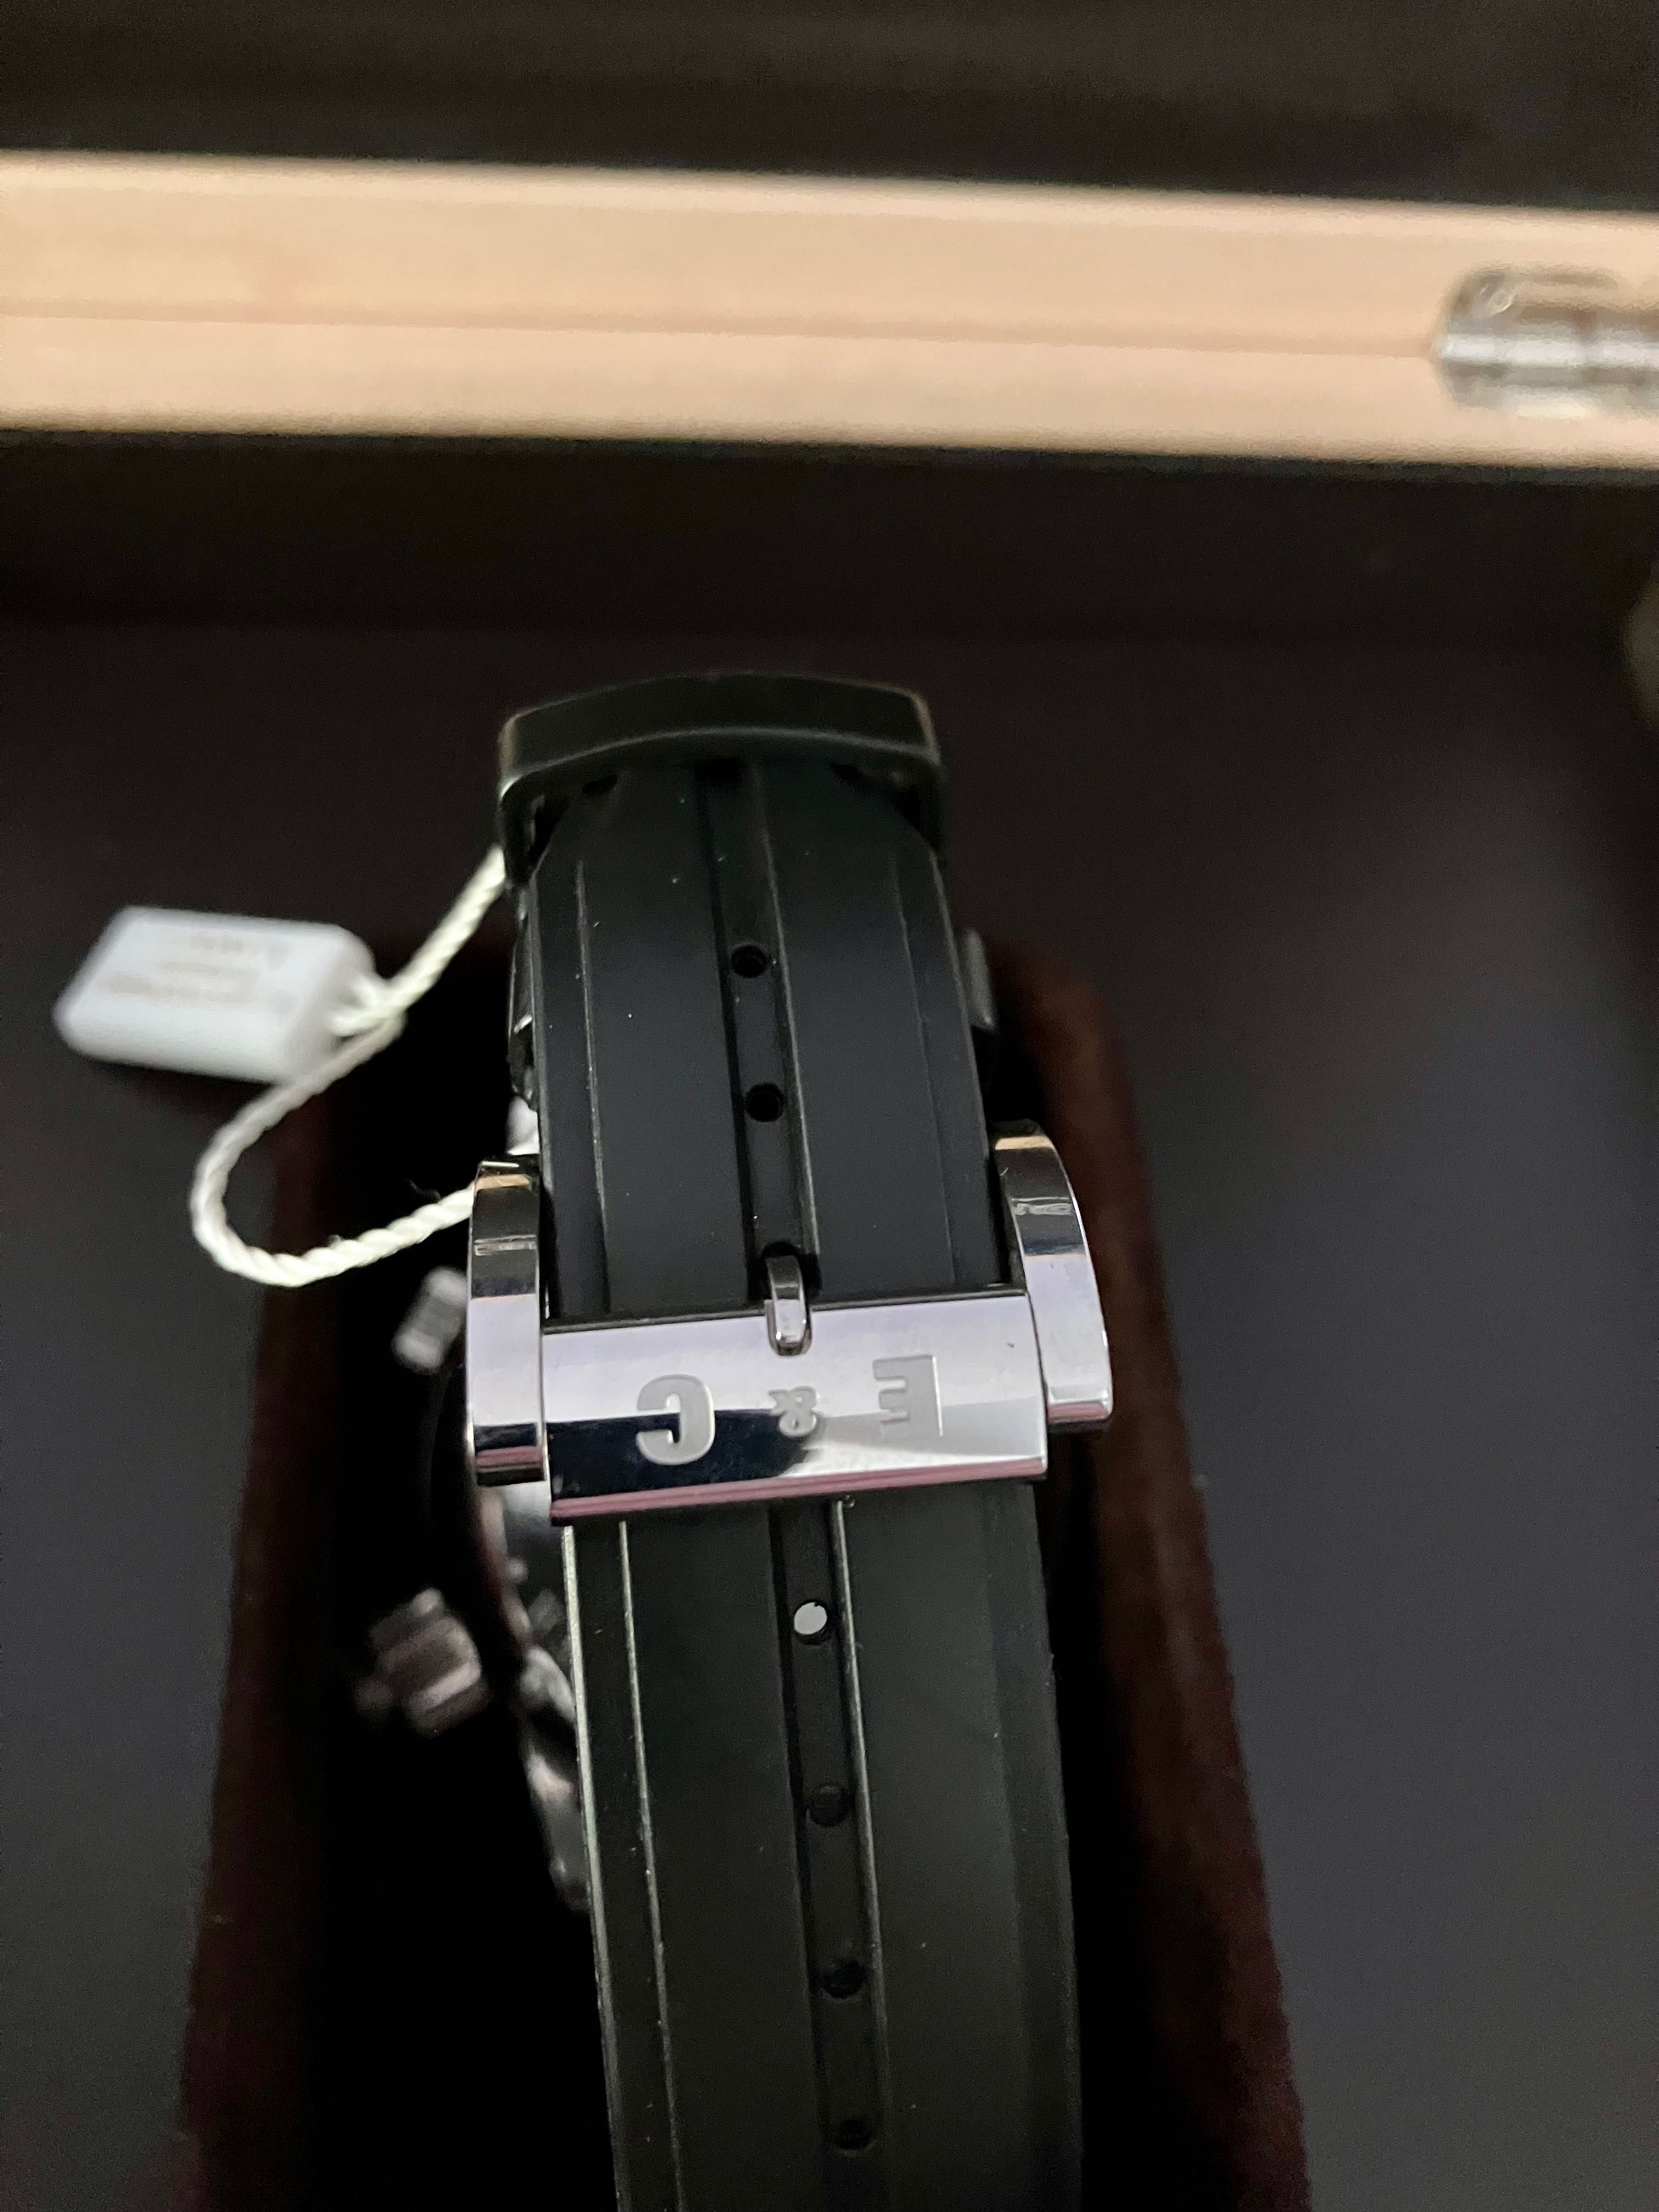 Zegarek Eberhard Scafodat 500, bransoleta  i pasek, praktycznie nowy